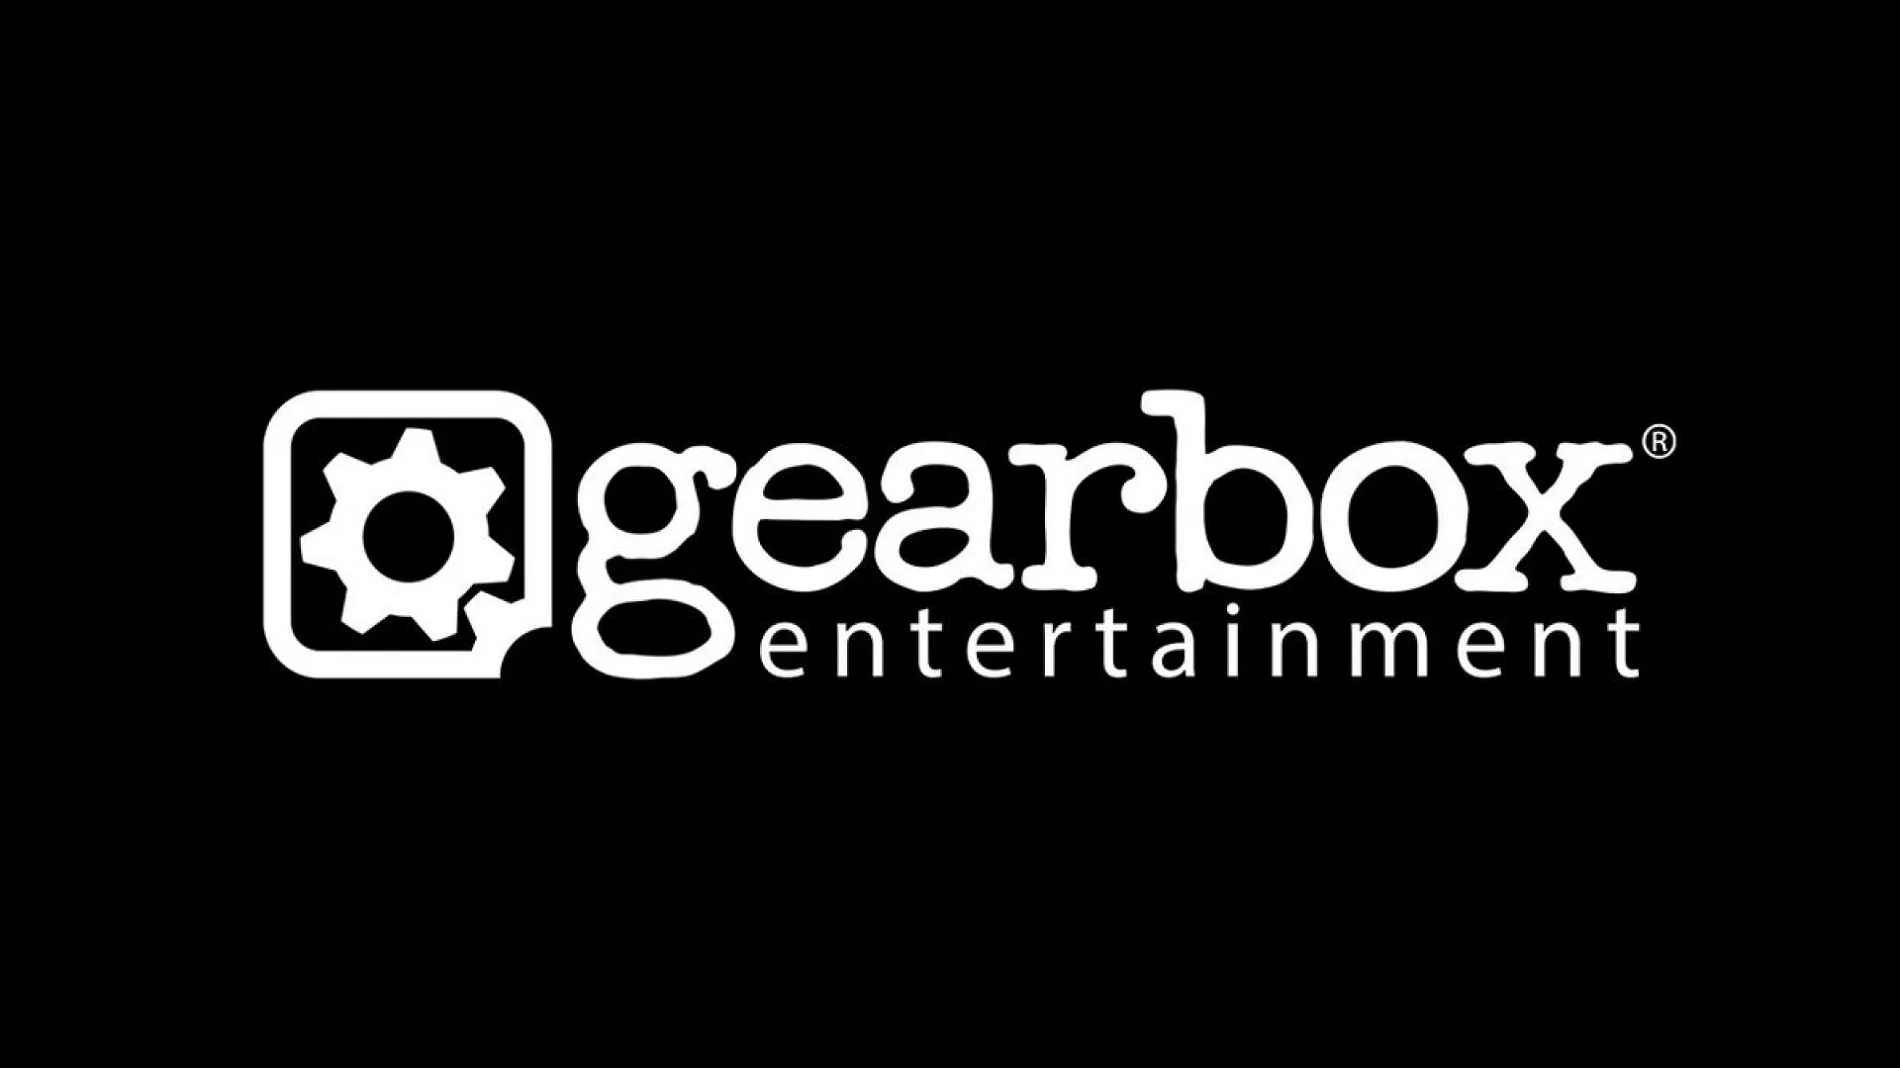 Embracer продаст создавшую Borderlands студию Gearbox компании Take-Two - фото 1